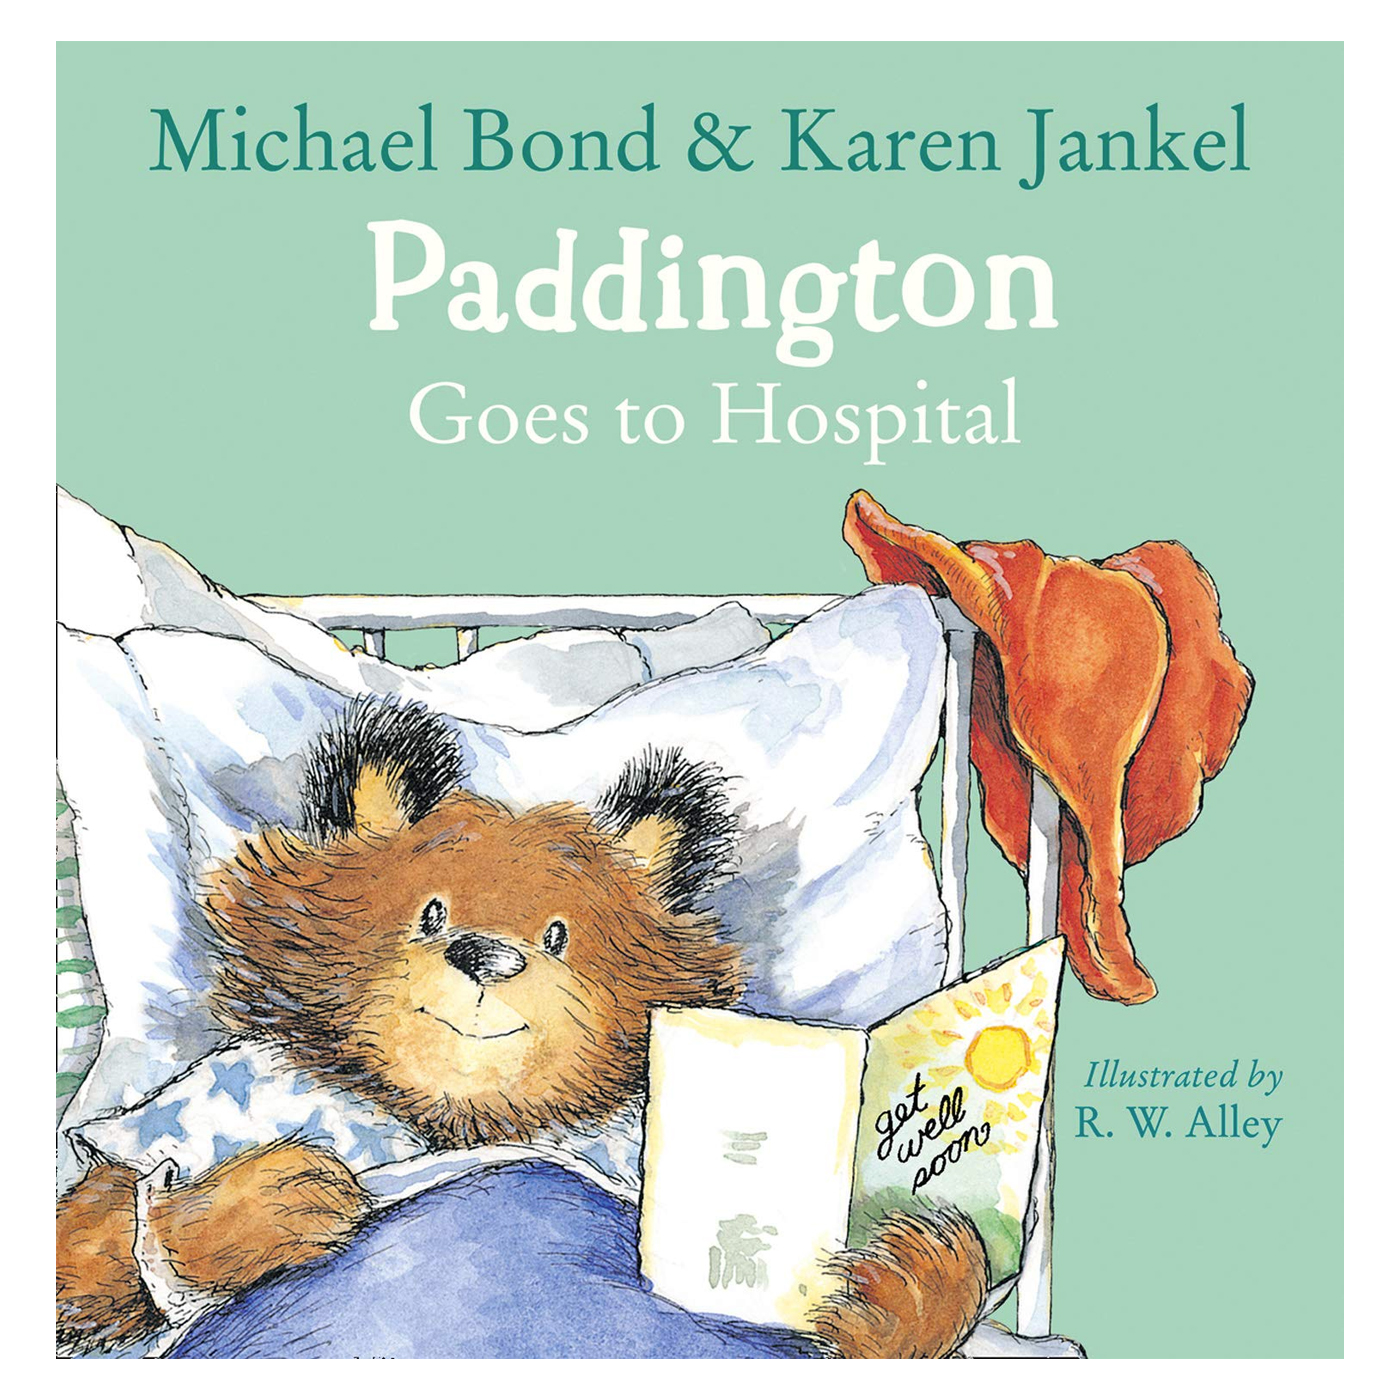  Paddington Goes to Hospital